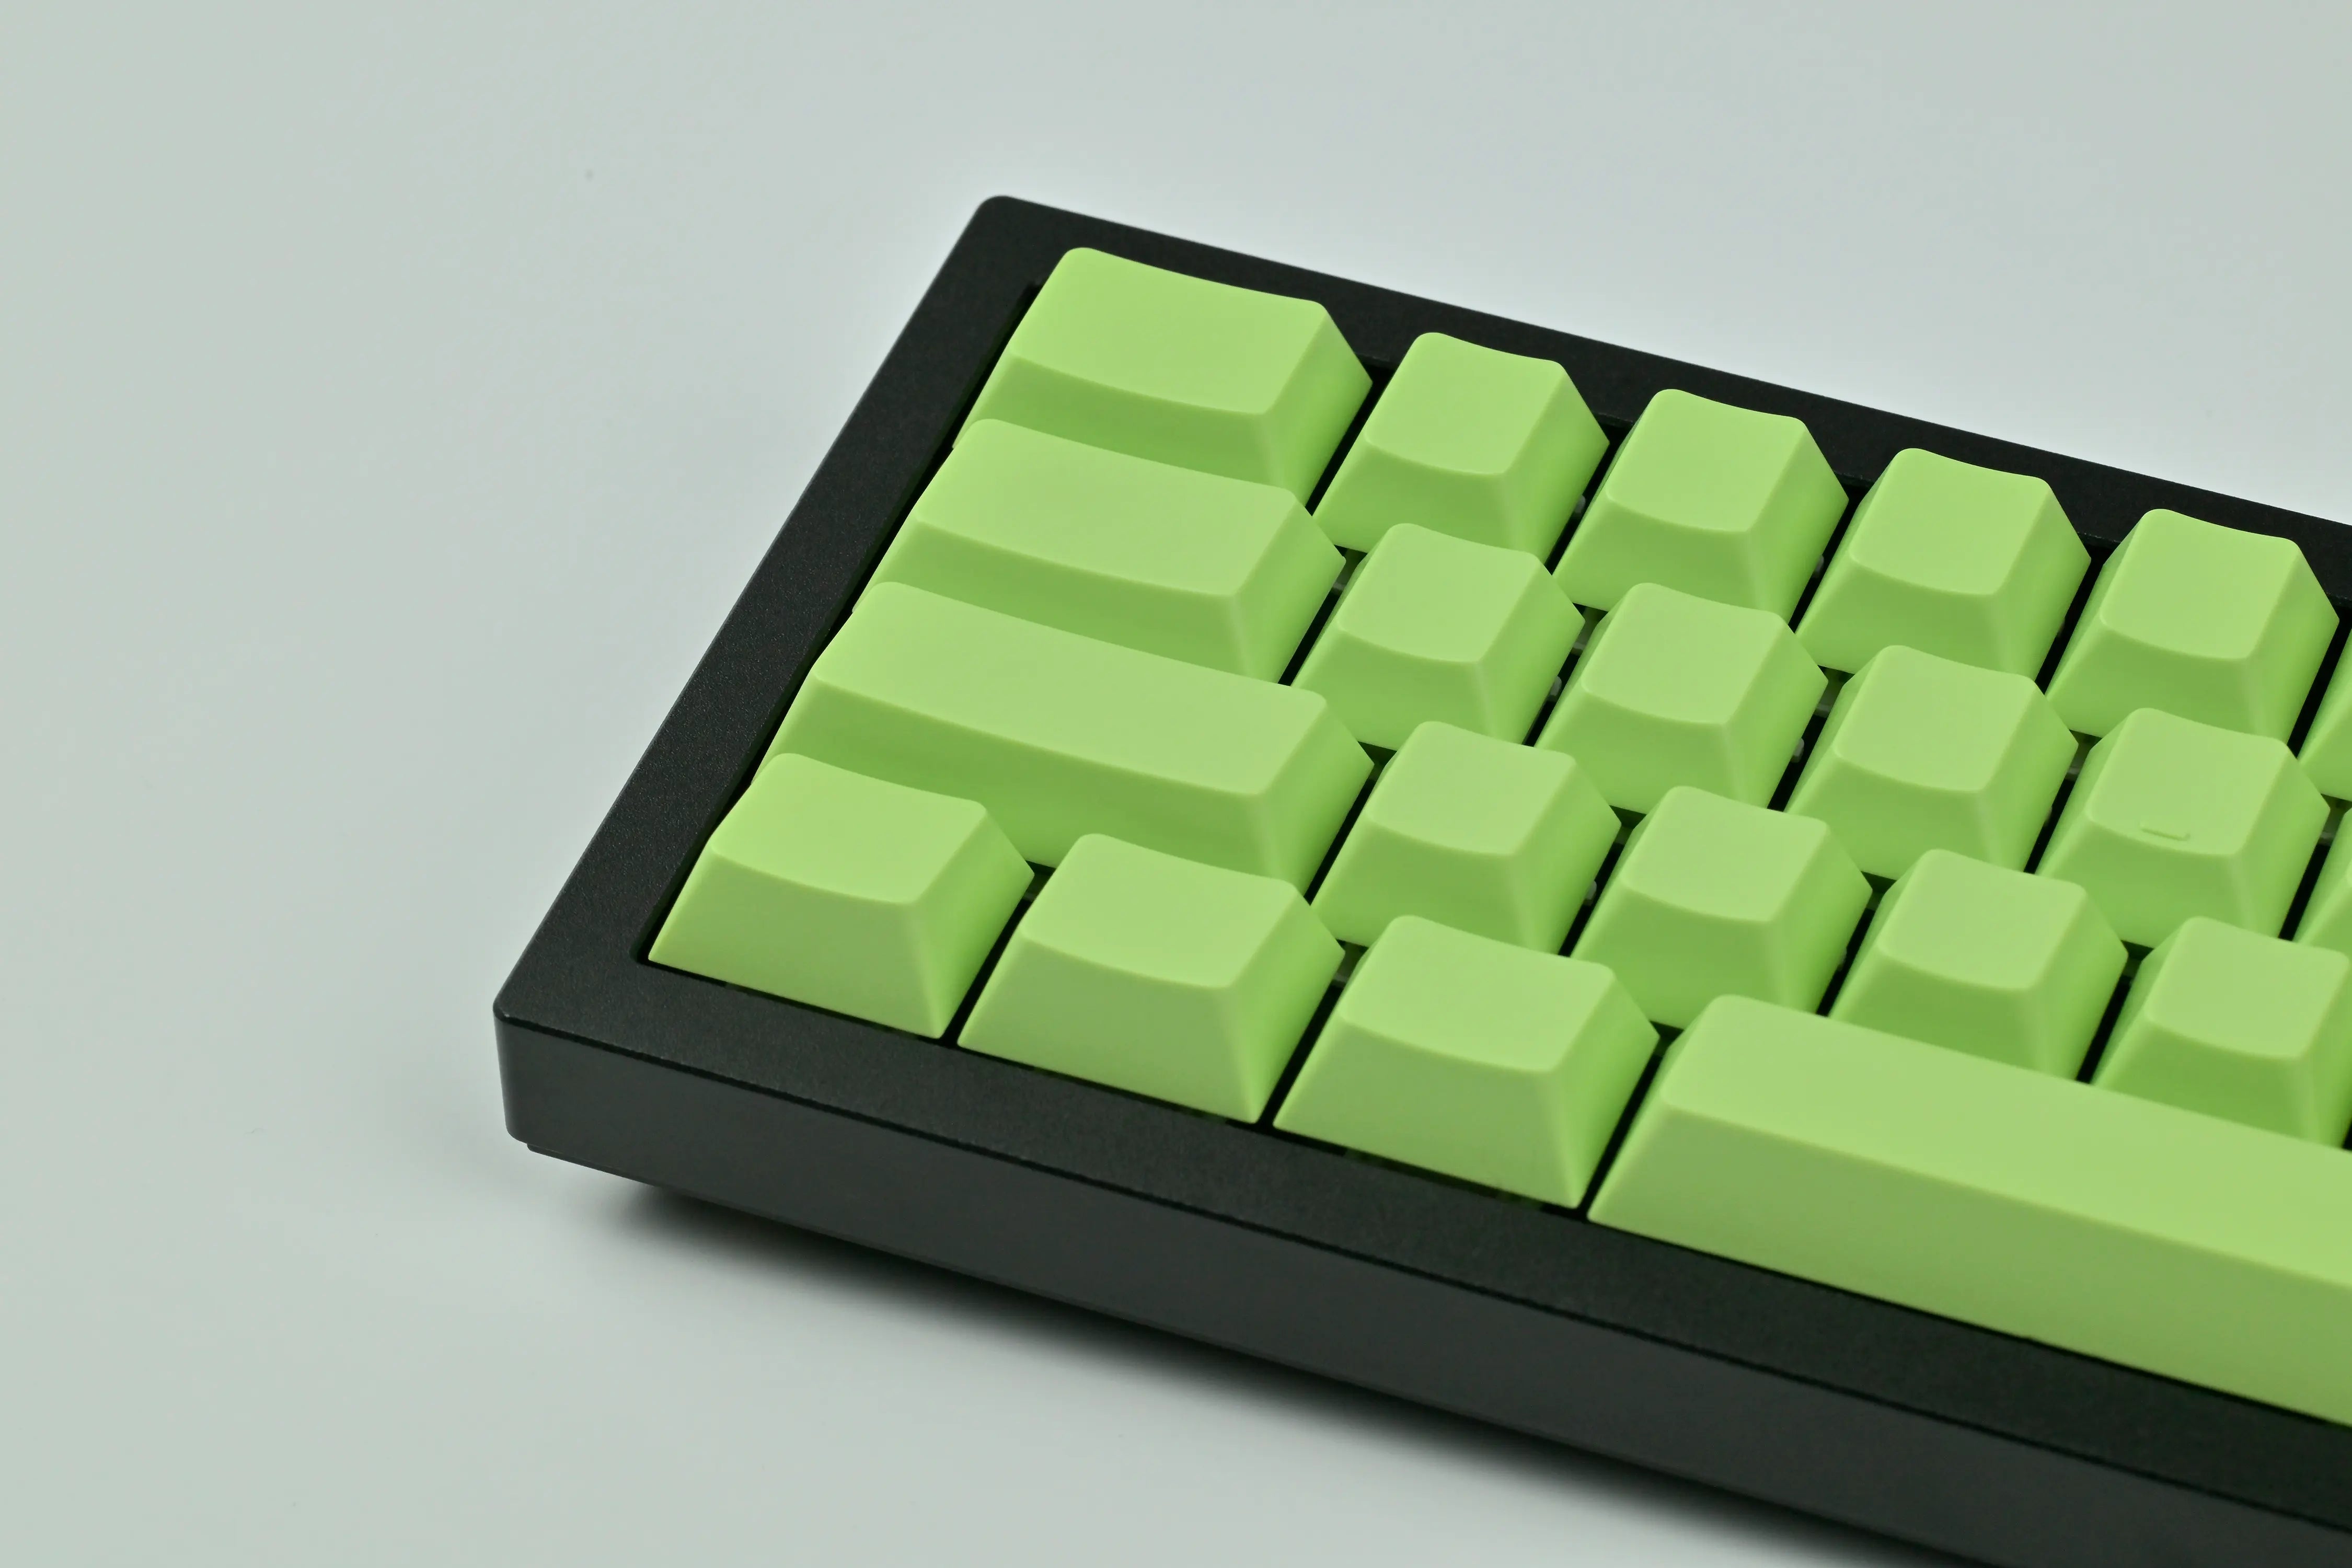 Keyreative ABS Cherry Profile Light Green Blank Keycaps